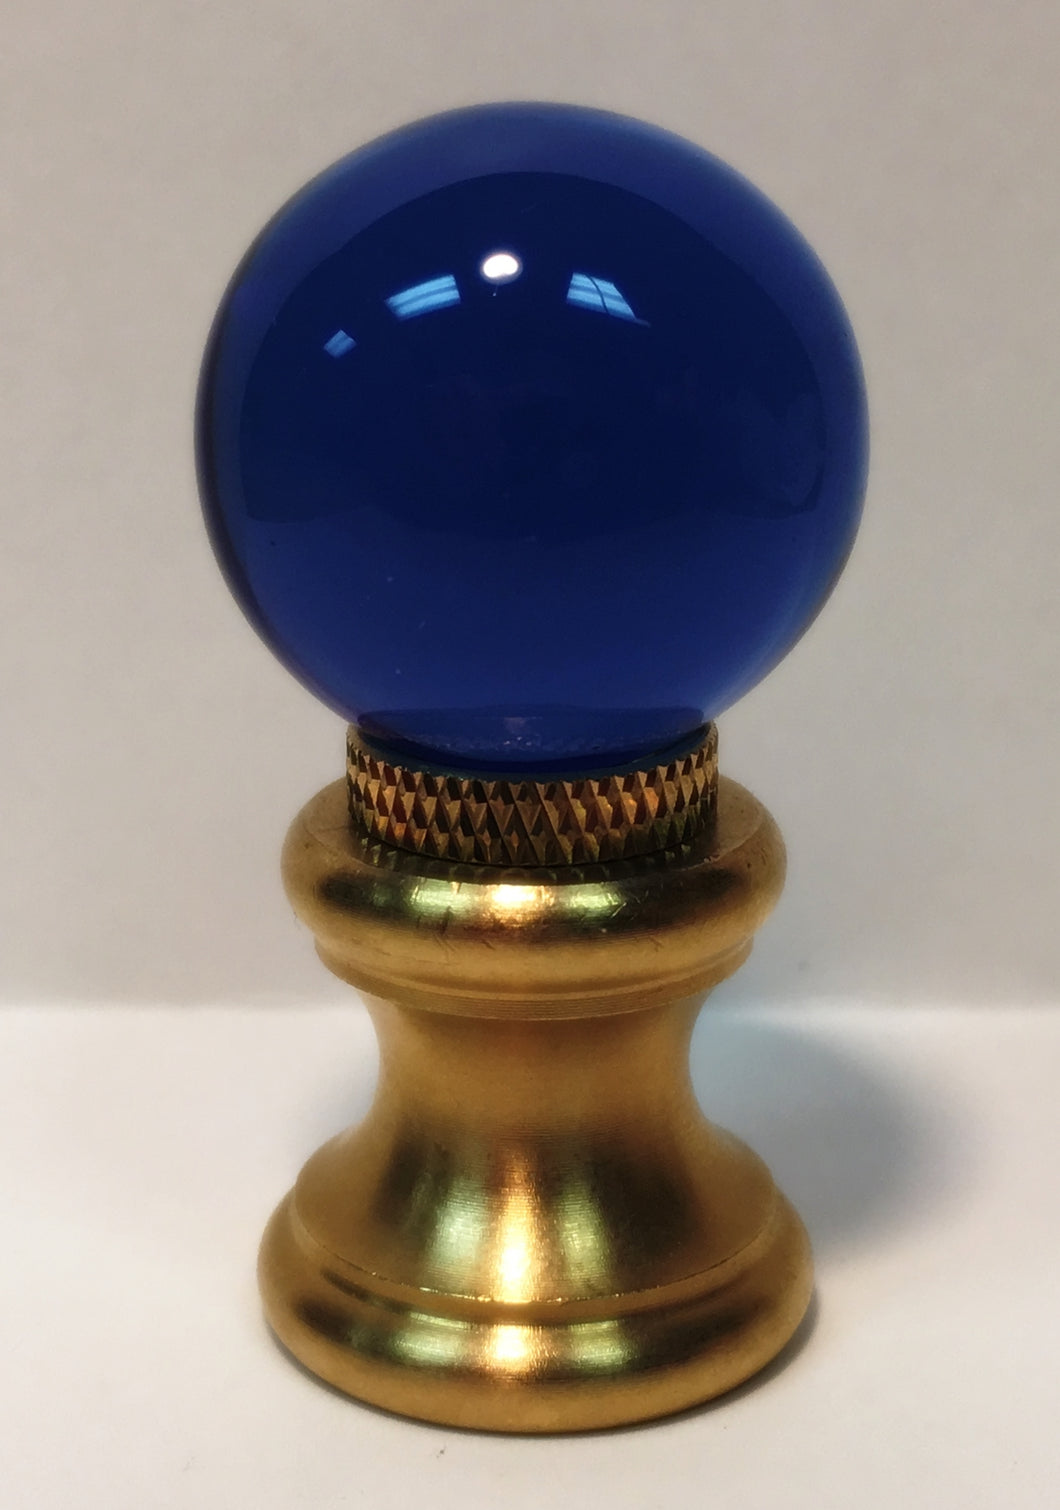 GLASS ORB-Lamp Finial-Sky Blue, Polished Brass Finish, Dual Thread